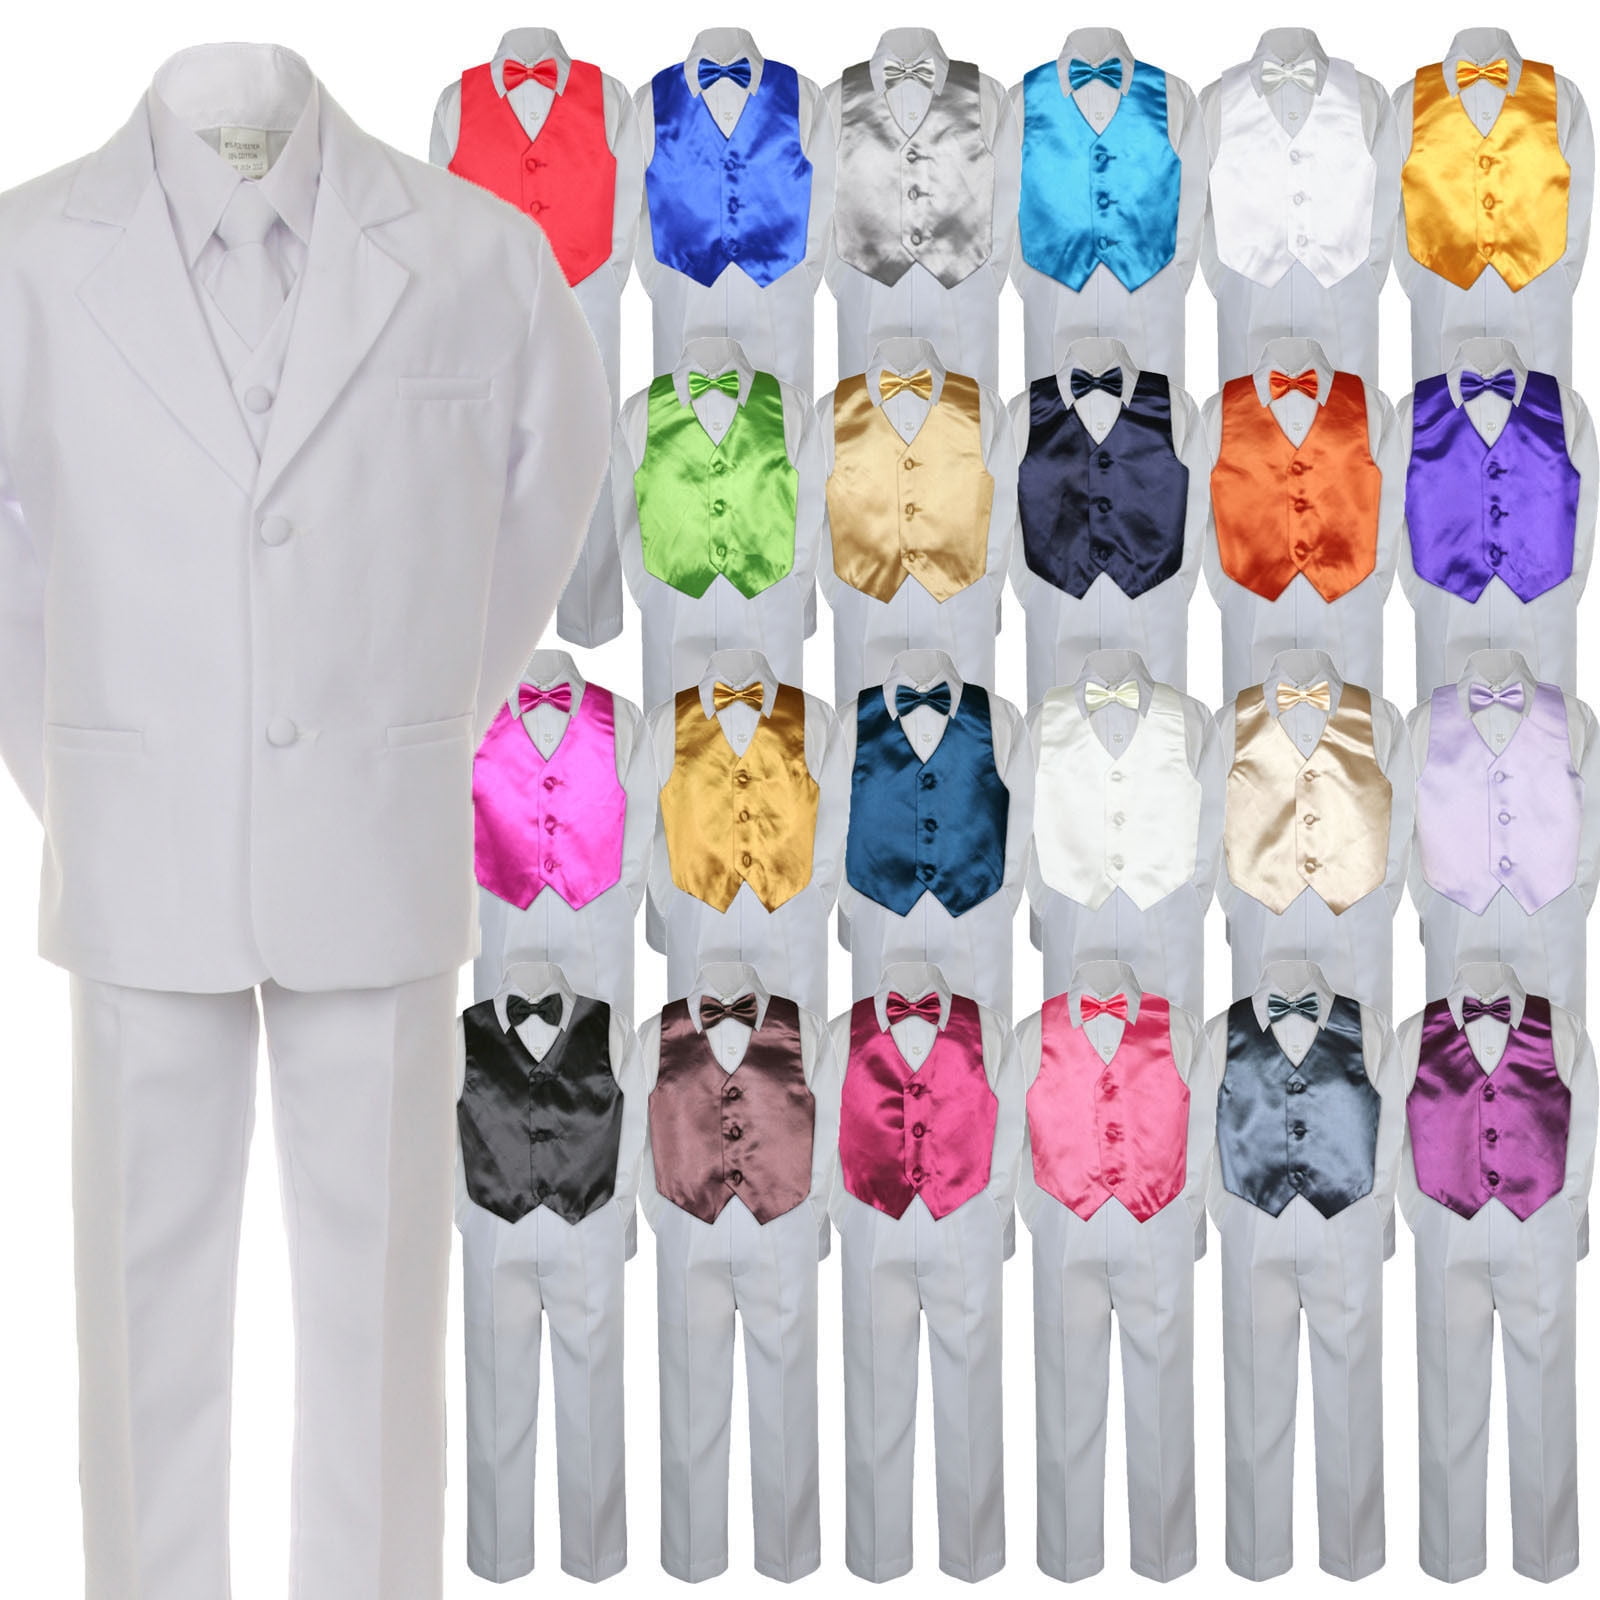 23 Color Satin Necktie Vest Set Baby Boy Toddler Teen for Formal Tuxedo Suit S-7 